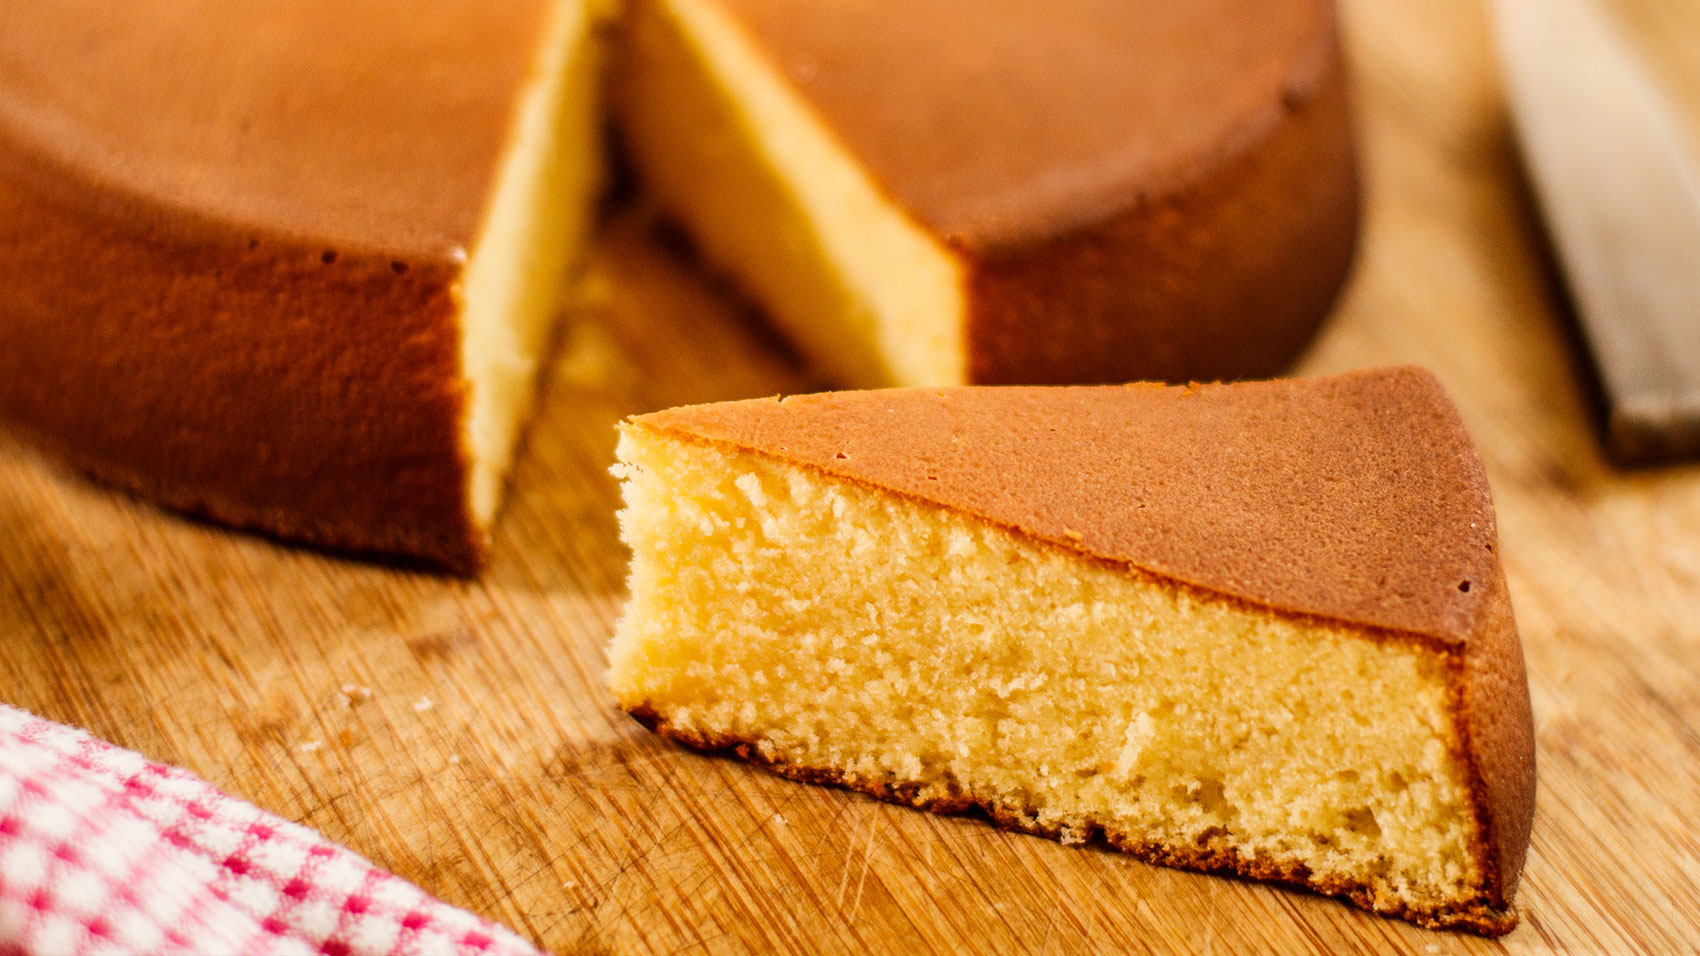 Basic Biszkopt Recipe - Polish Sponge Cake Recipe That You Will Love!